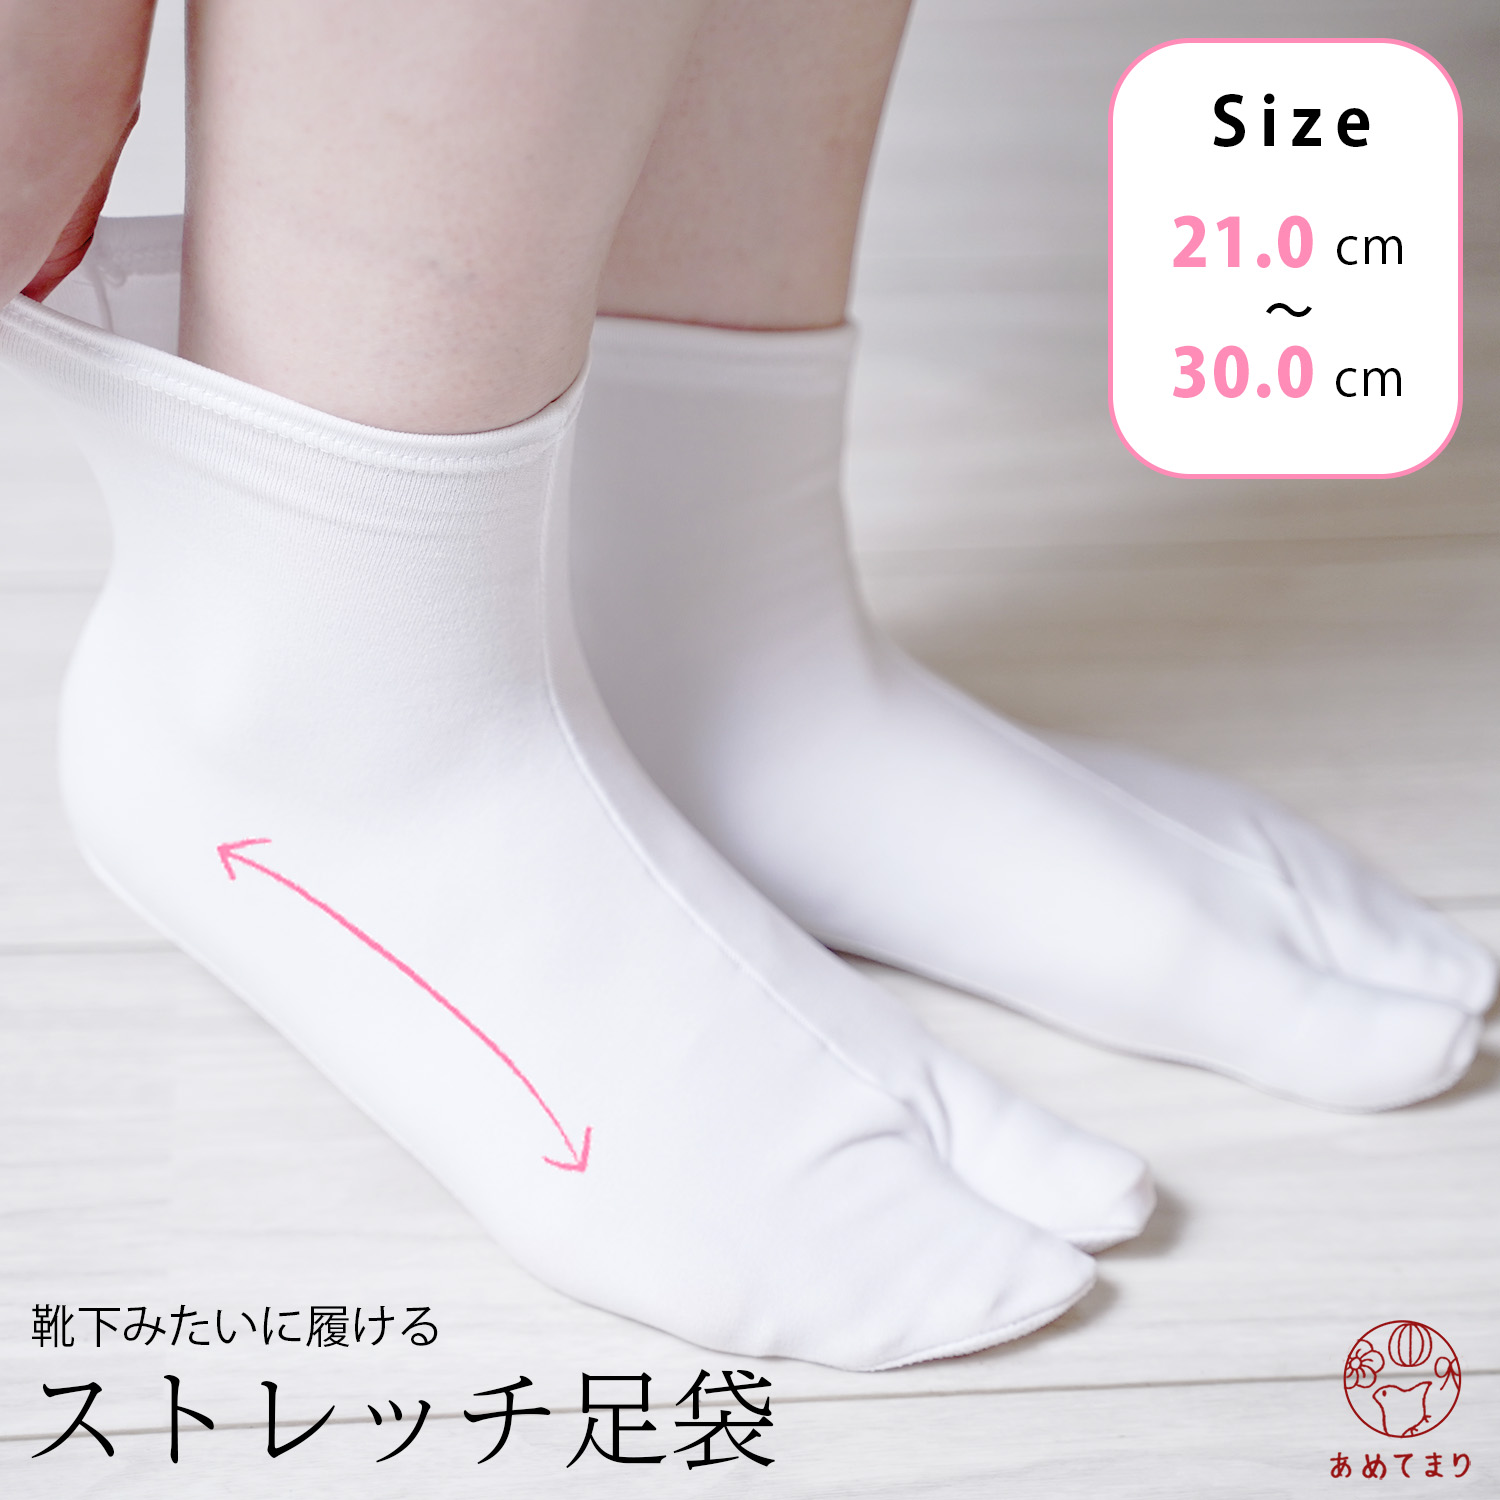 85%OFF!】 足袋 日本製 単衣足袋 ストレッチ 婦人用 口ゴム 着付け小物 和装小物 n015